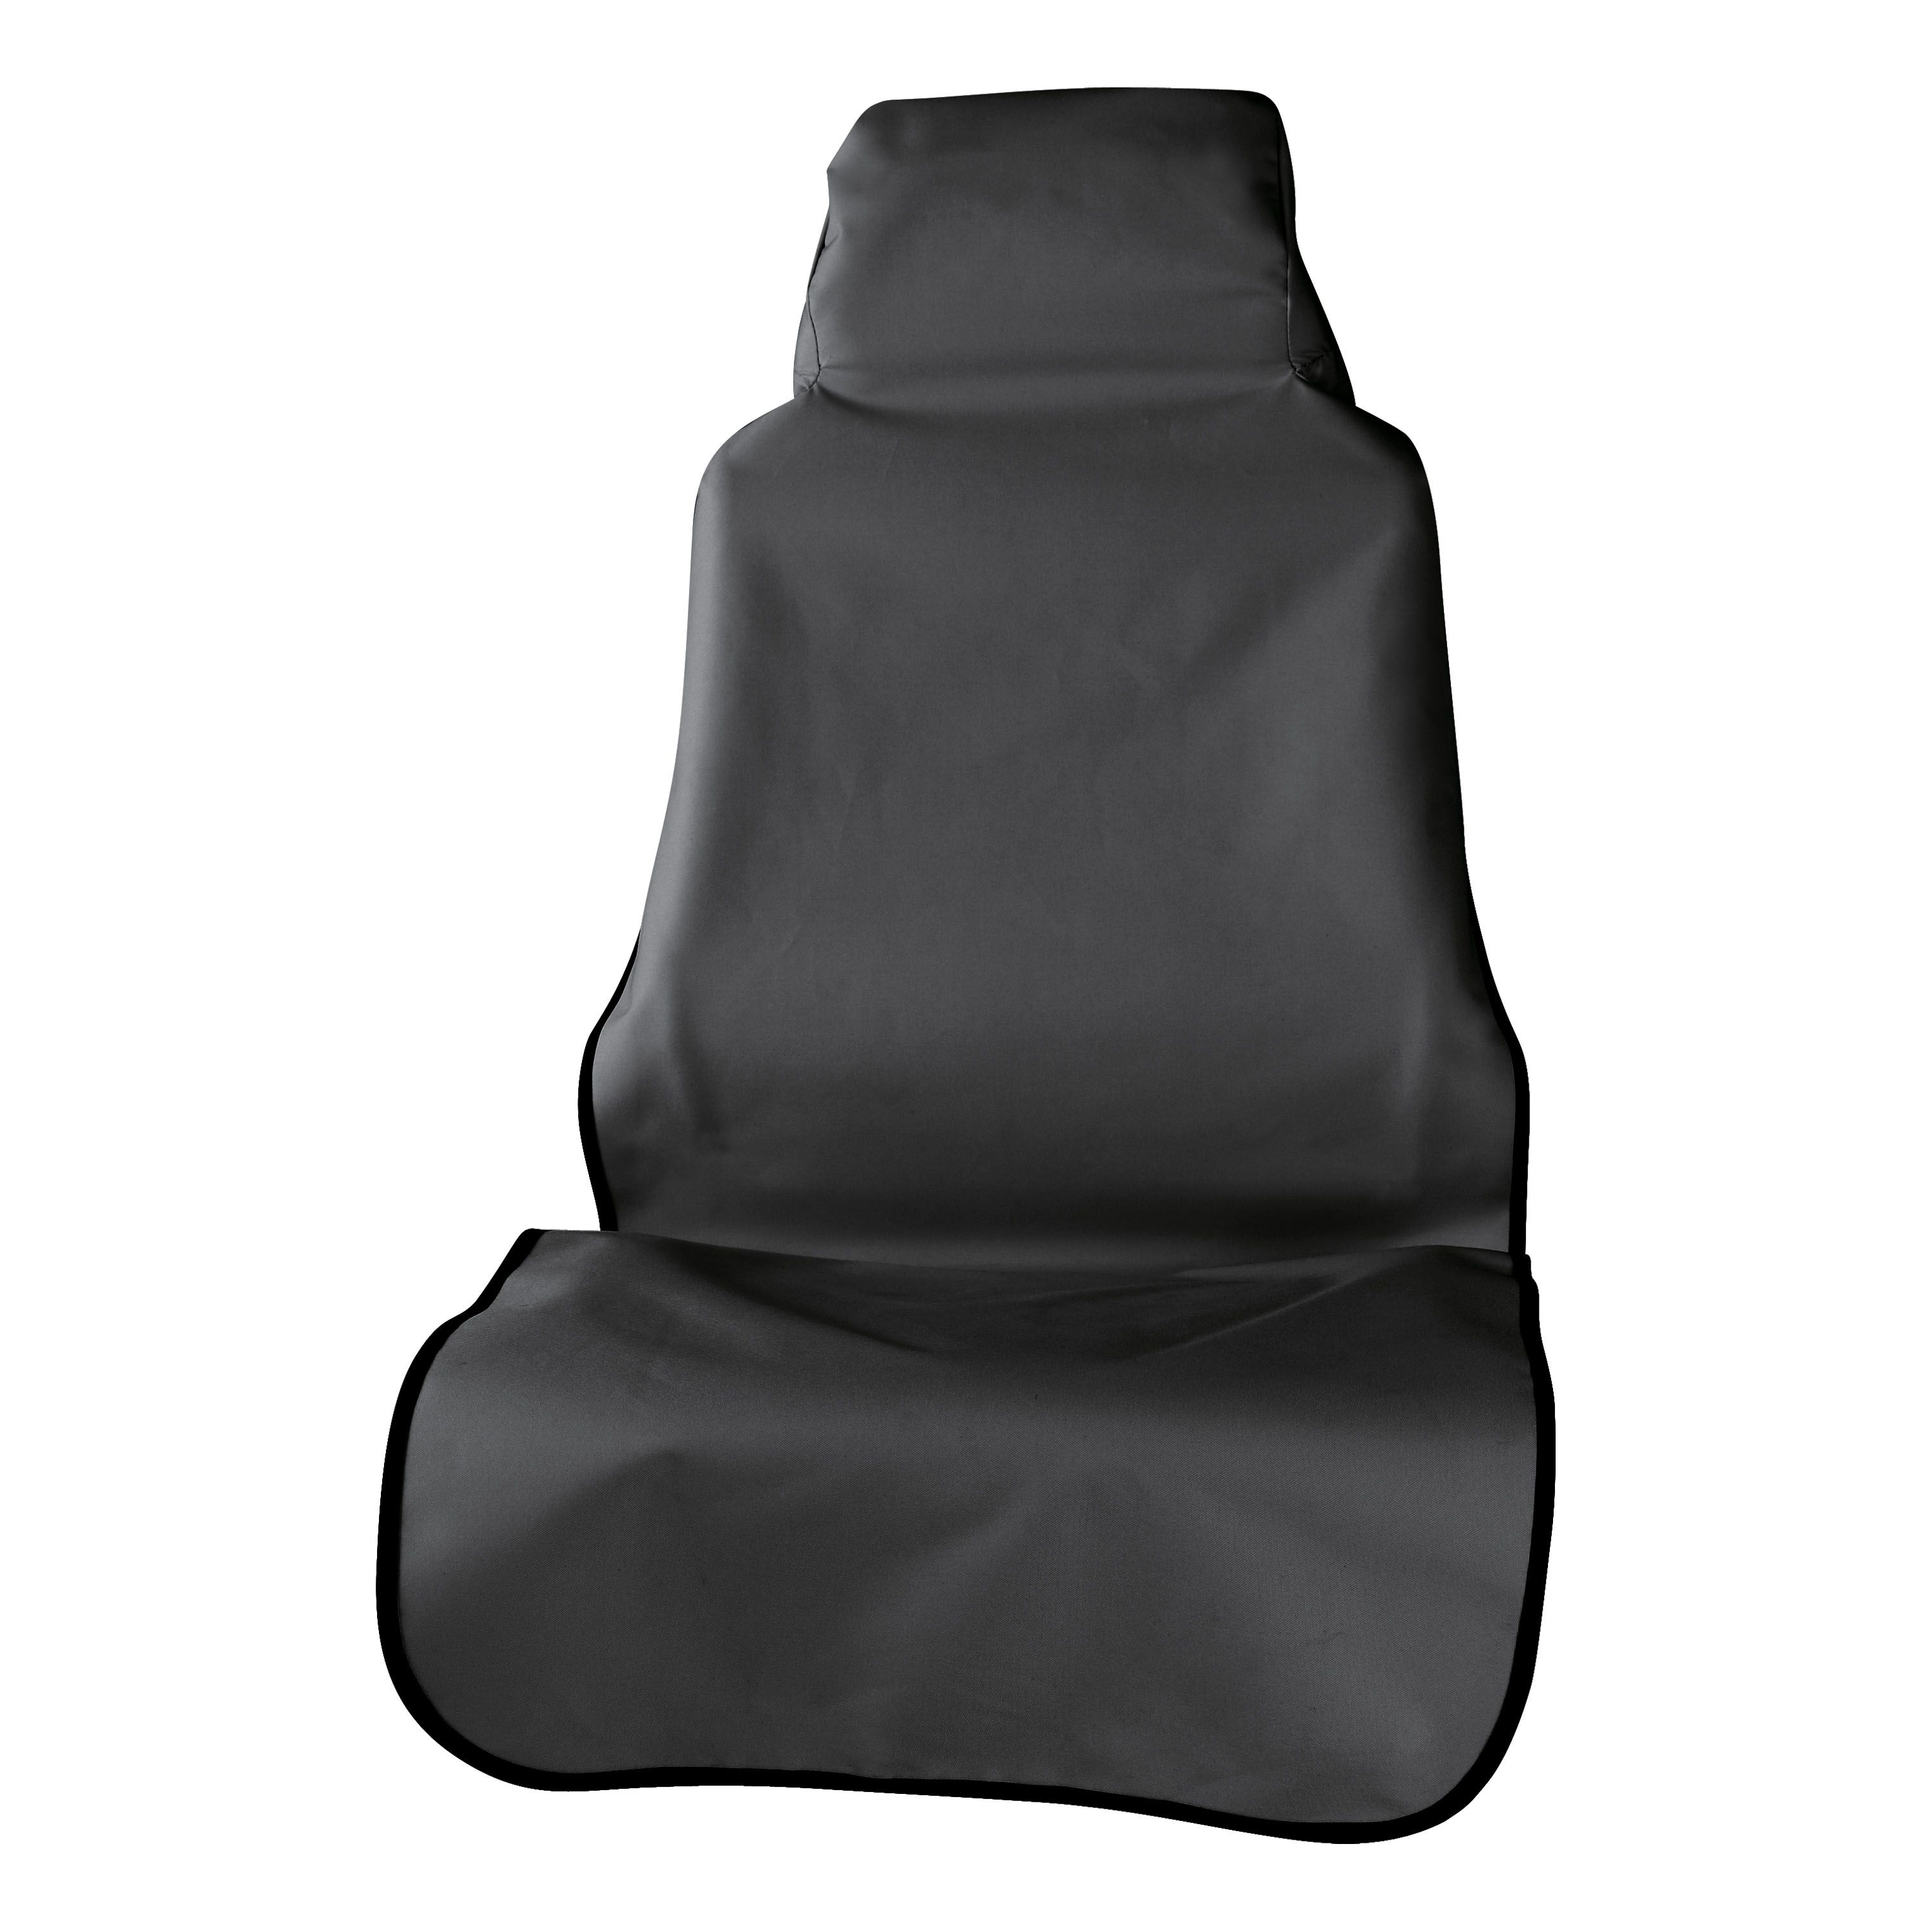 Aries Seat Defender Bucket Seat Cover - Black